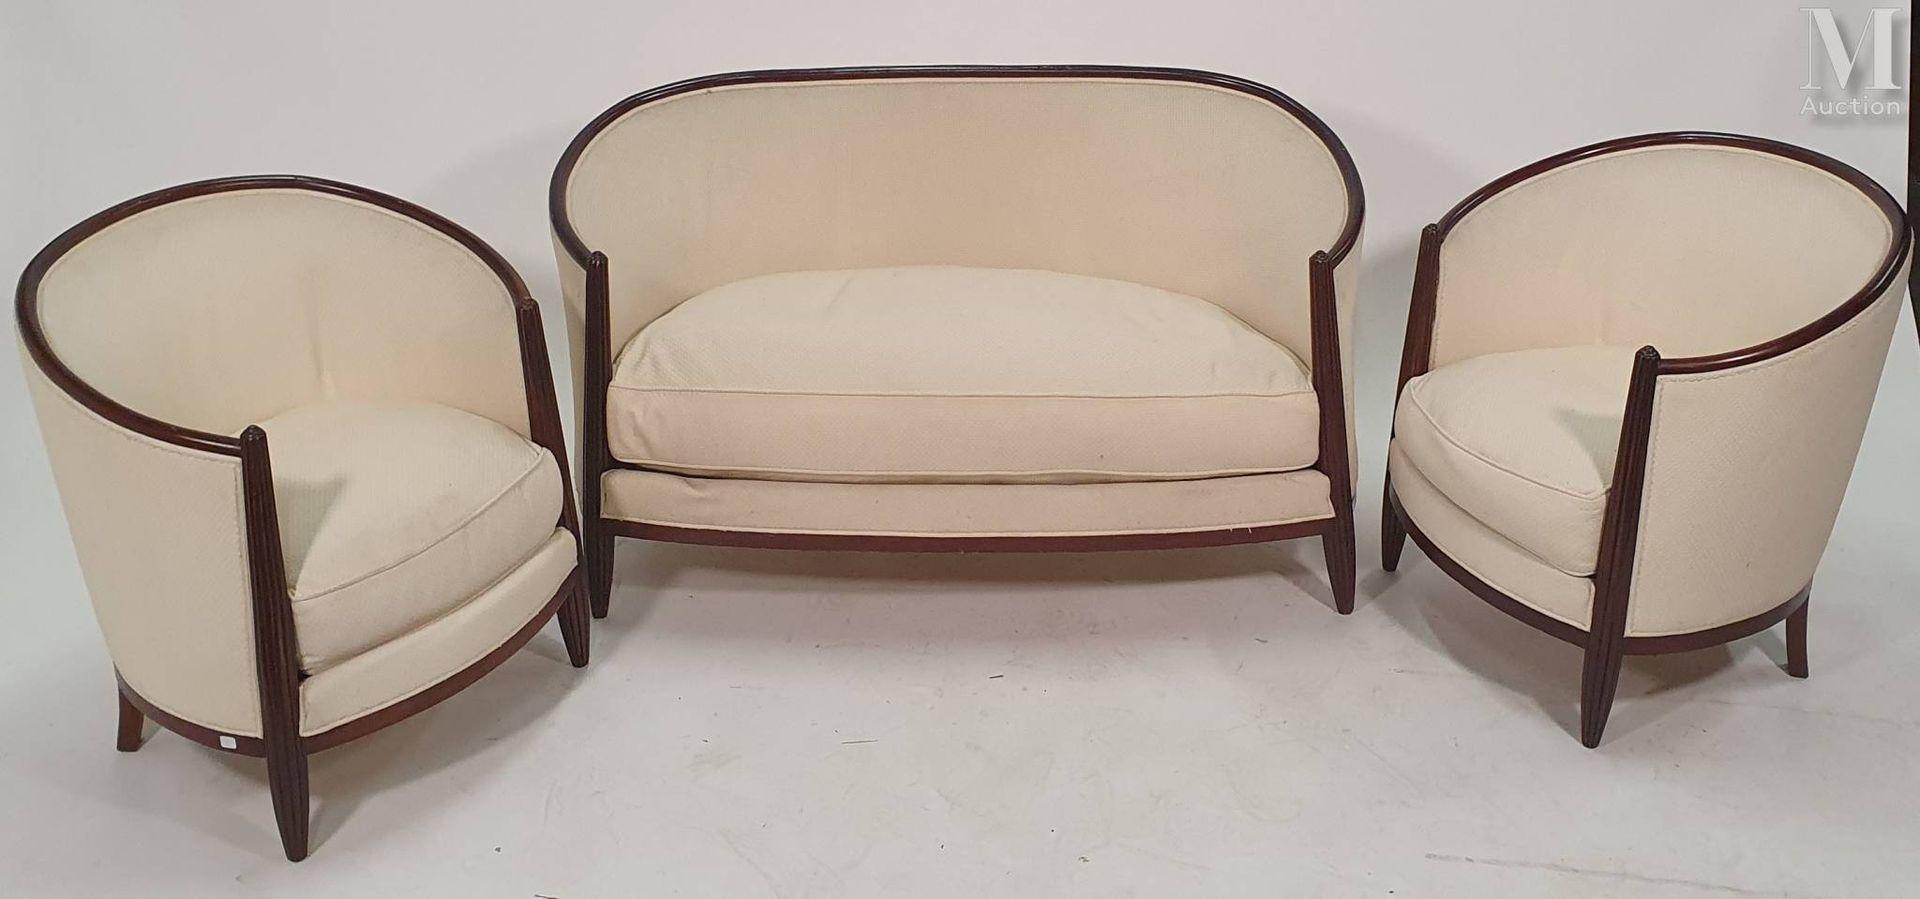 TRAVAIL ART DECO 套装包括一个沙发和两个篮子形式的扶手椅。前面的凹槽直立，后面的马刀腿。覆盖着白色的奶油布

扶手椅：73 x 64 x 68 &hellip;